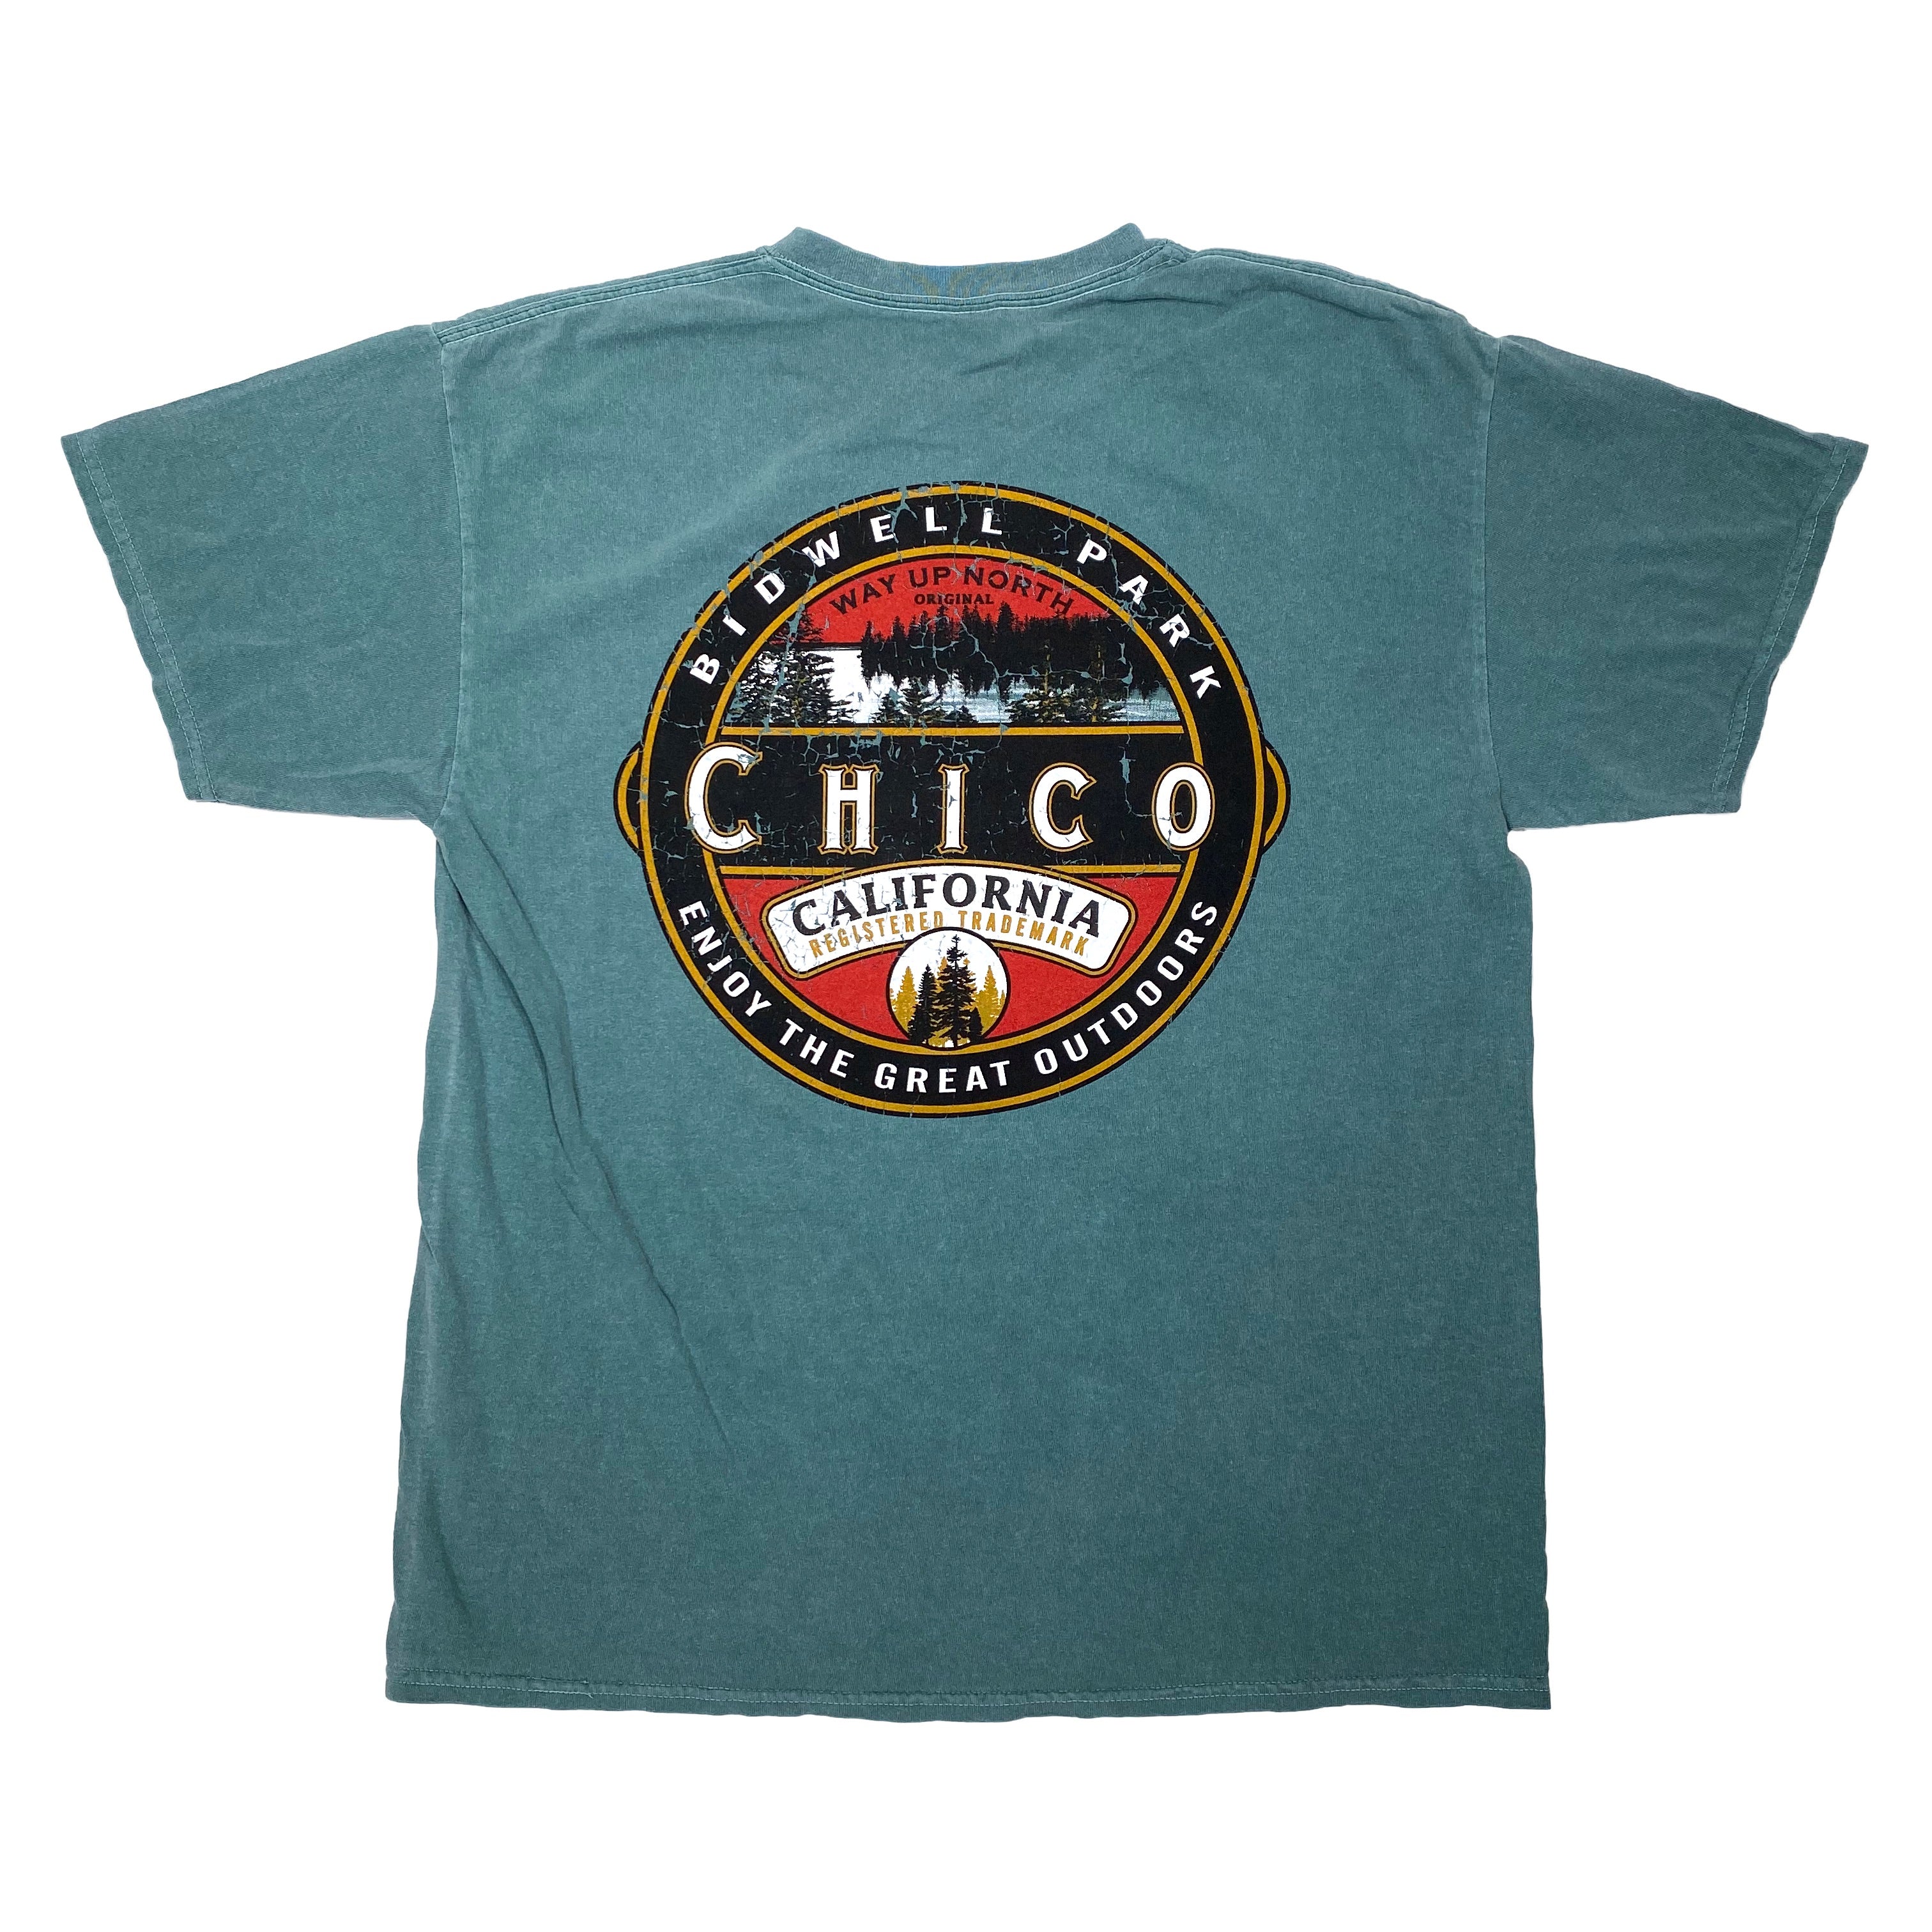 Carson Way Up North Chico - T-Shirt PINE S  3234265.13